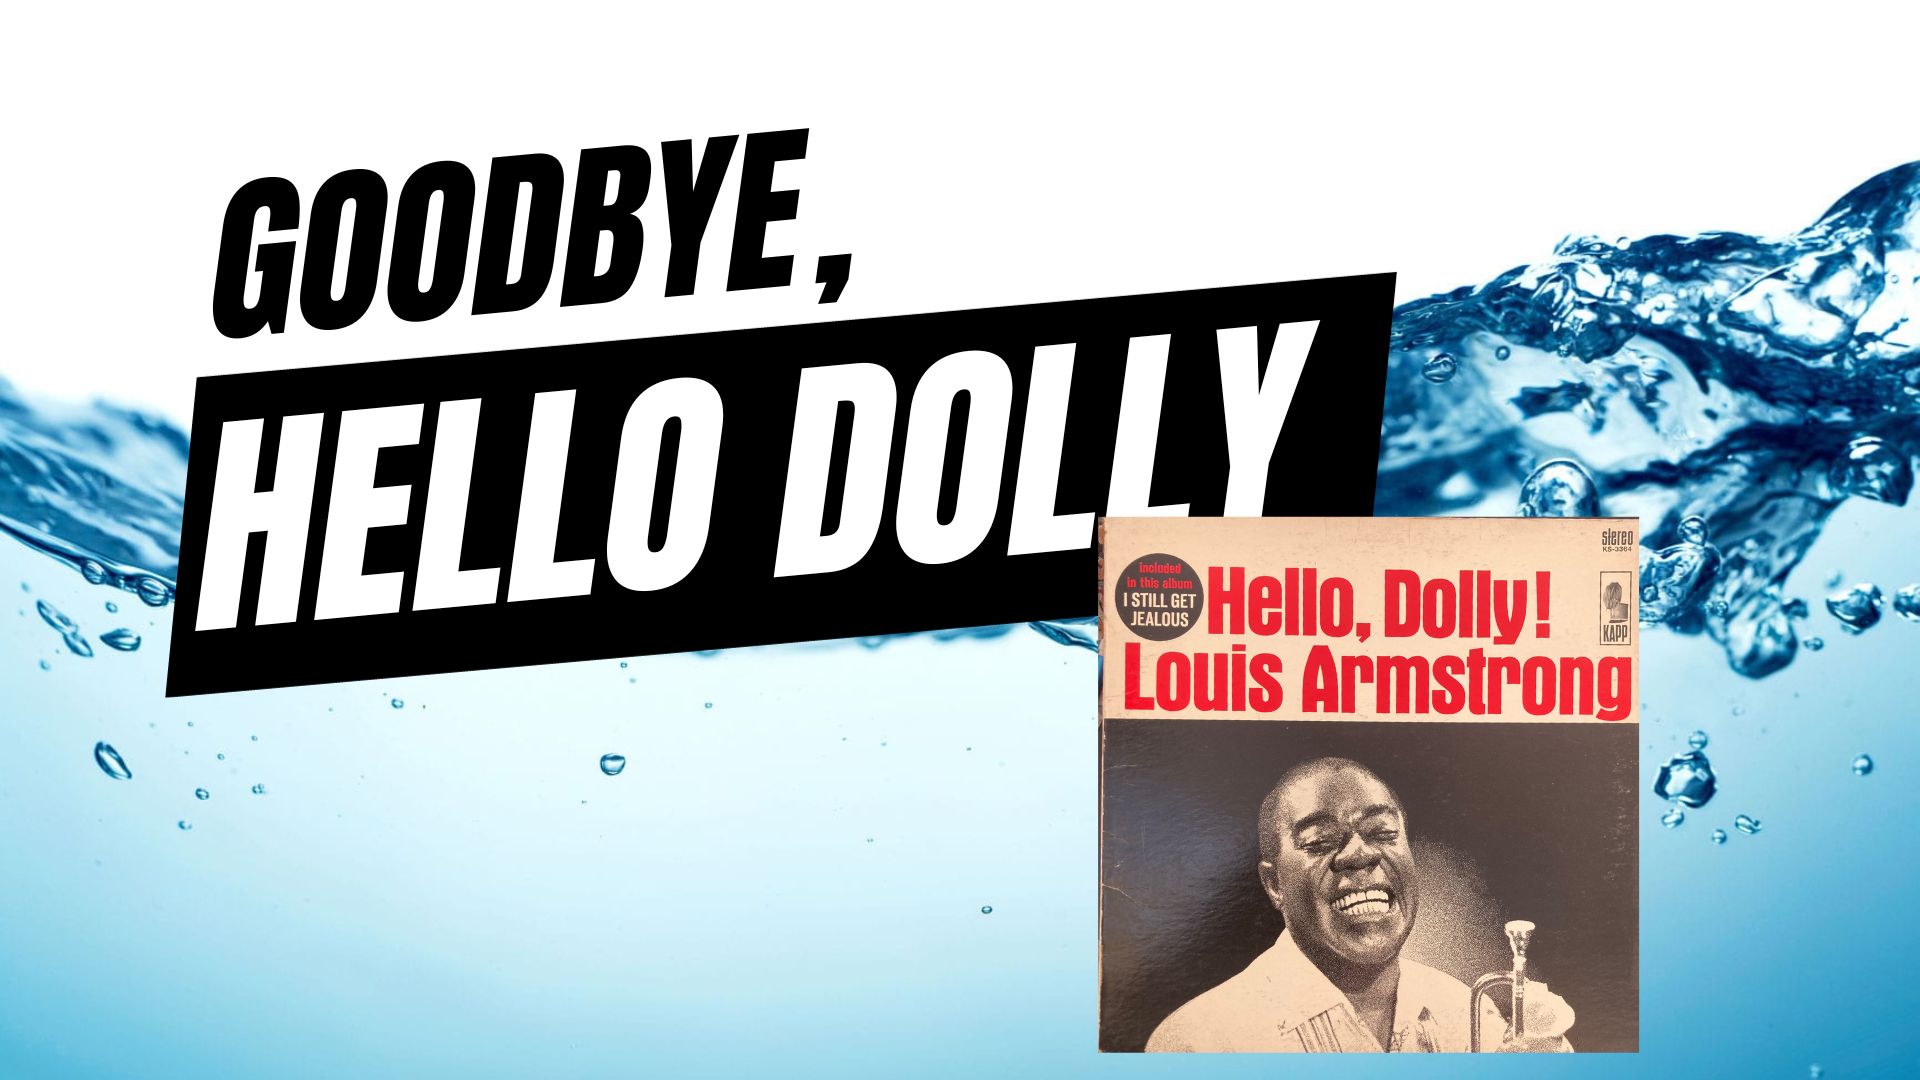 EP470 – Goodbye, Hello Dolly